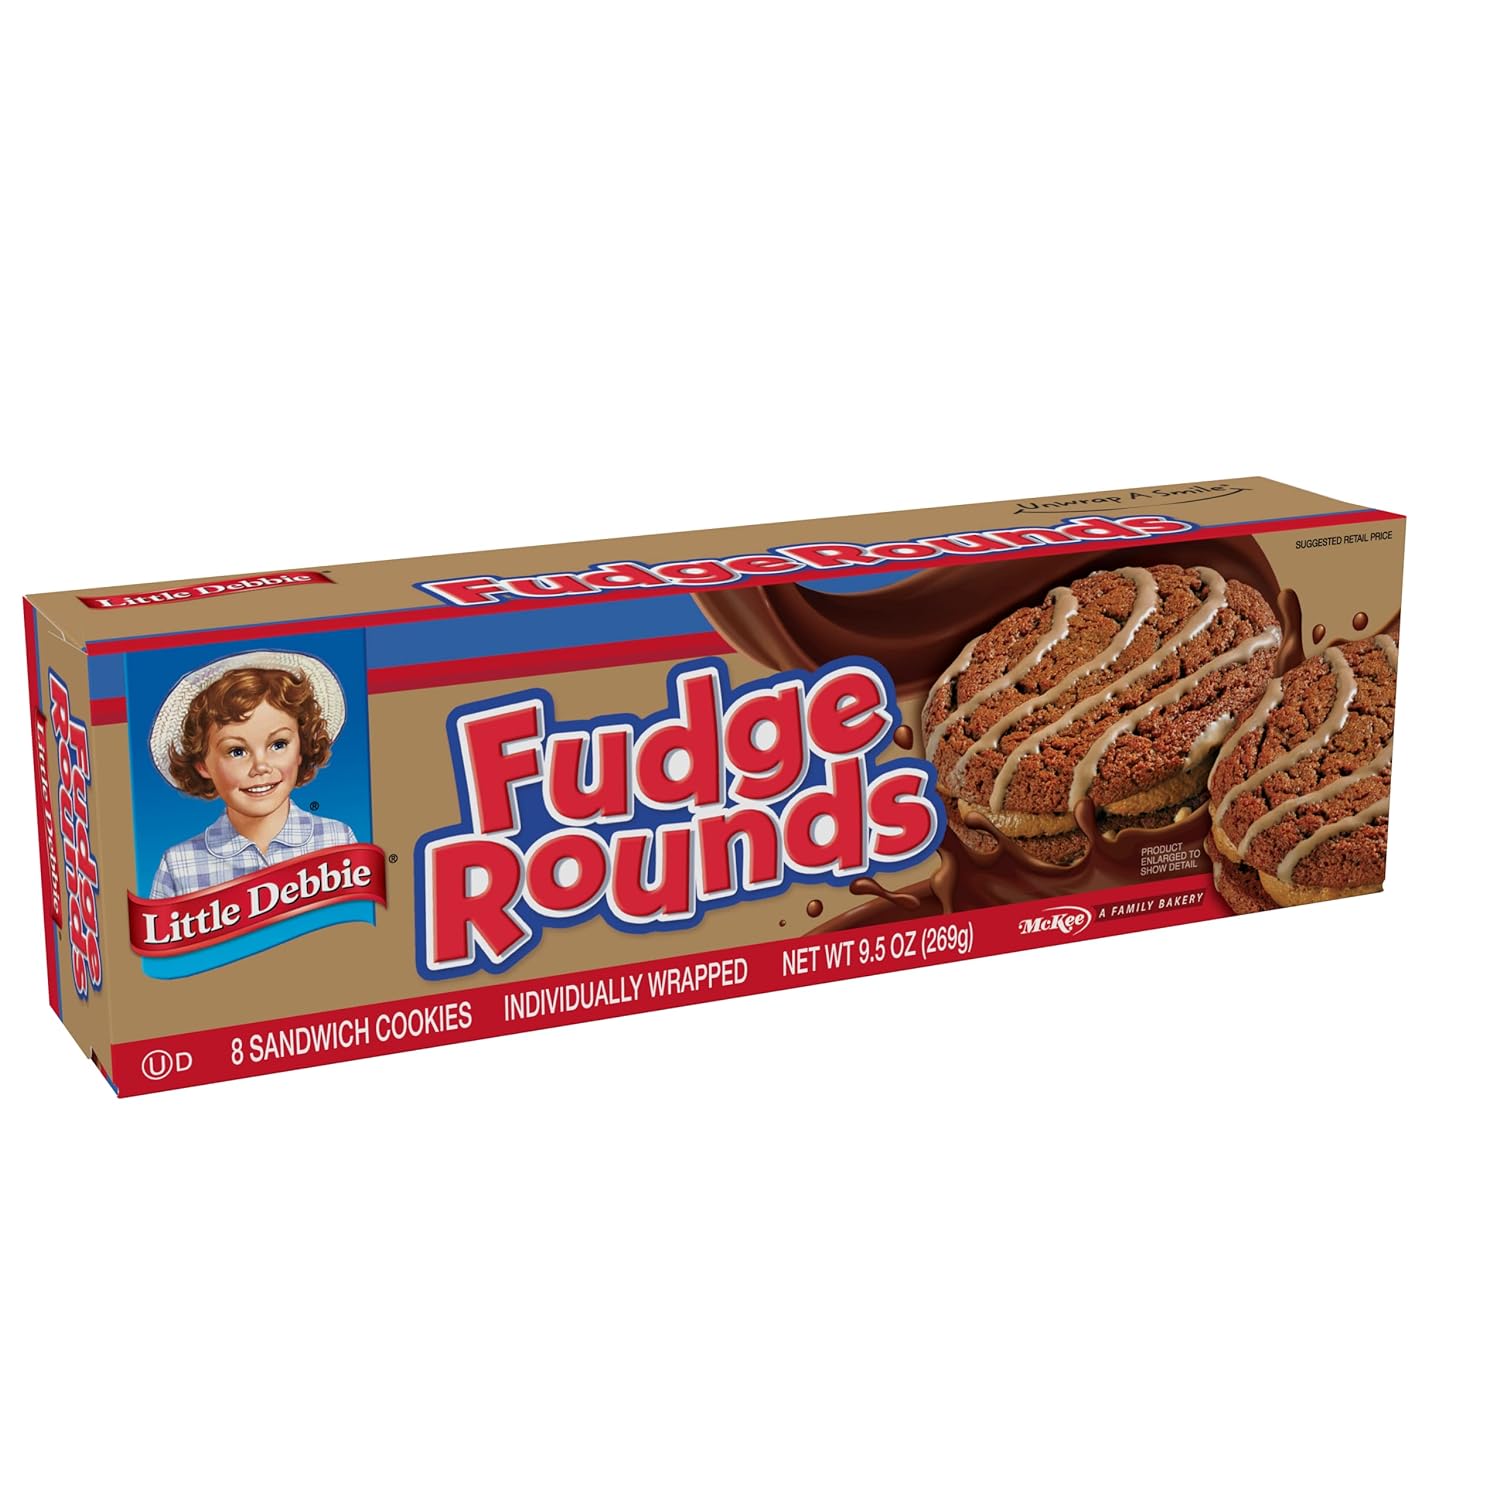 Little Debbie Fudge Rounds, 64 Sandwich Cookies (8 Boxes) : Grocery & Gourmet Food